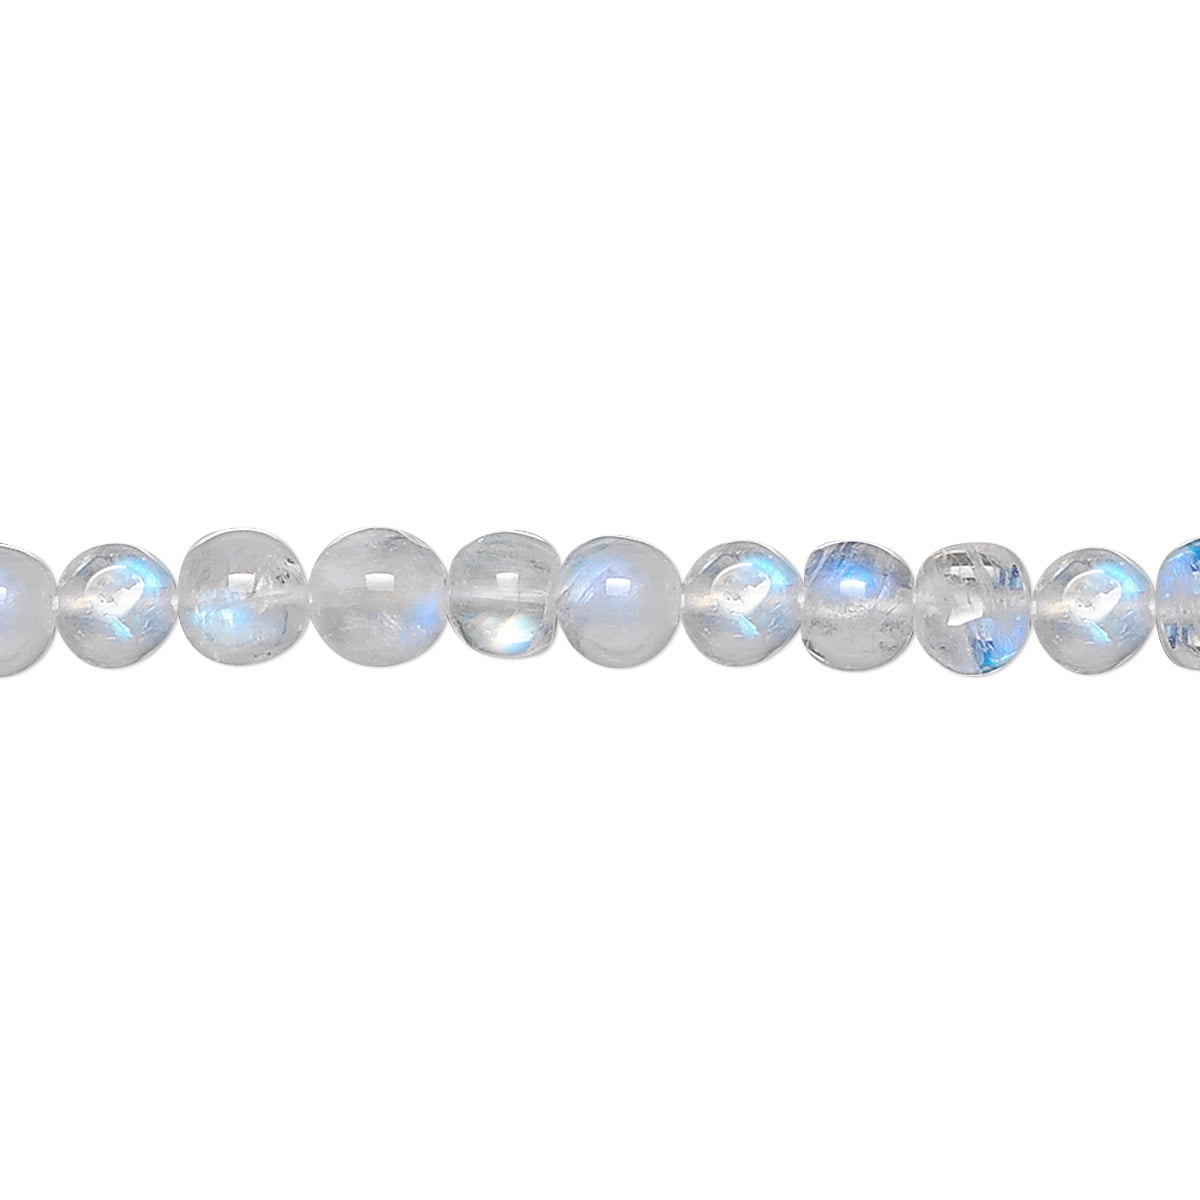 White Turquoise 4-16mm Round Gemstone Spacer Beads 16" Jewelry Making DIY 